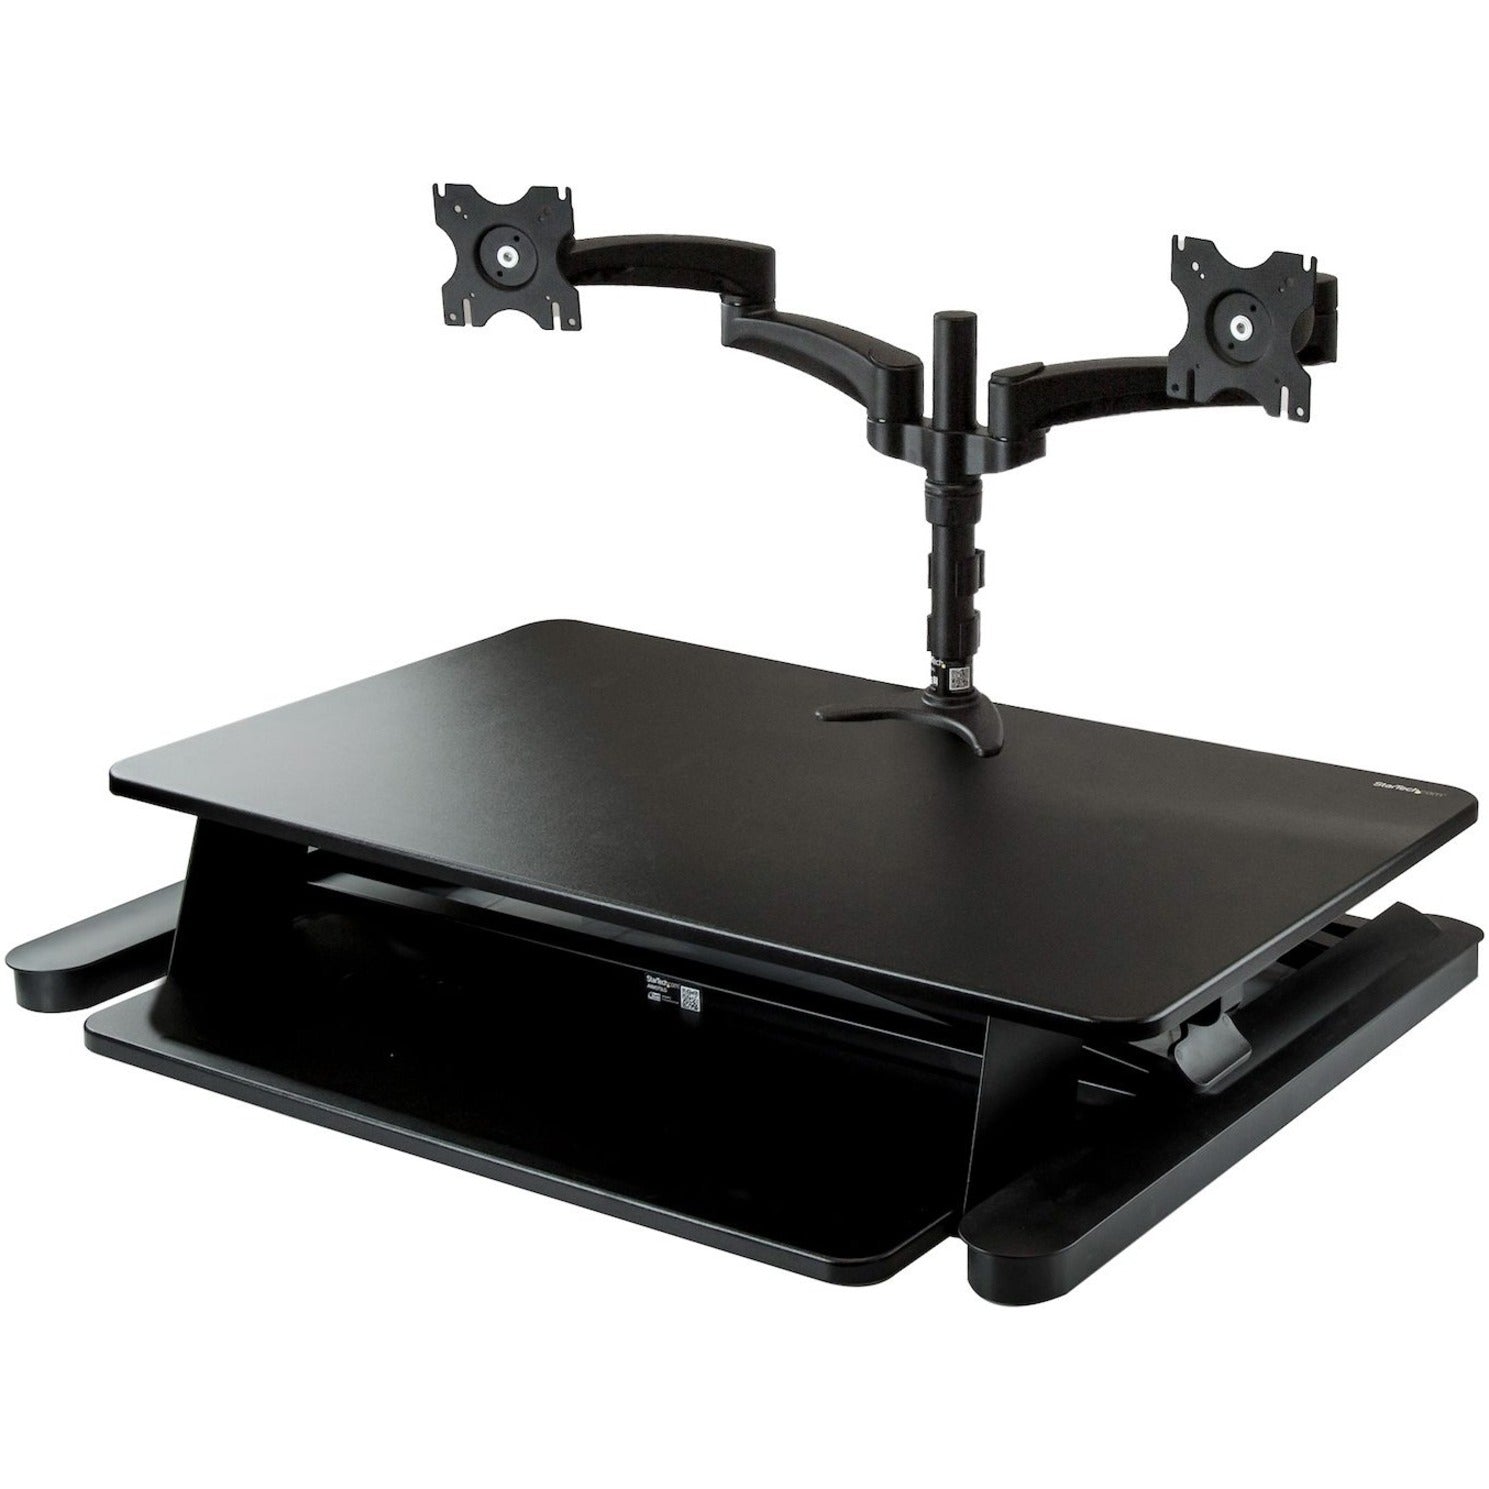 StarTech.com BNDSTSLGDUAL Dual Monitor Sit-Stand Desk Converter - 35" Wide Work Surface, Ergonomic, Height Adjustable, 28.10 lb Maximum Load Capacity